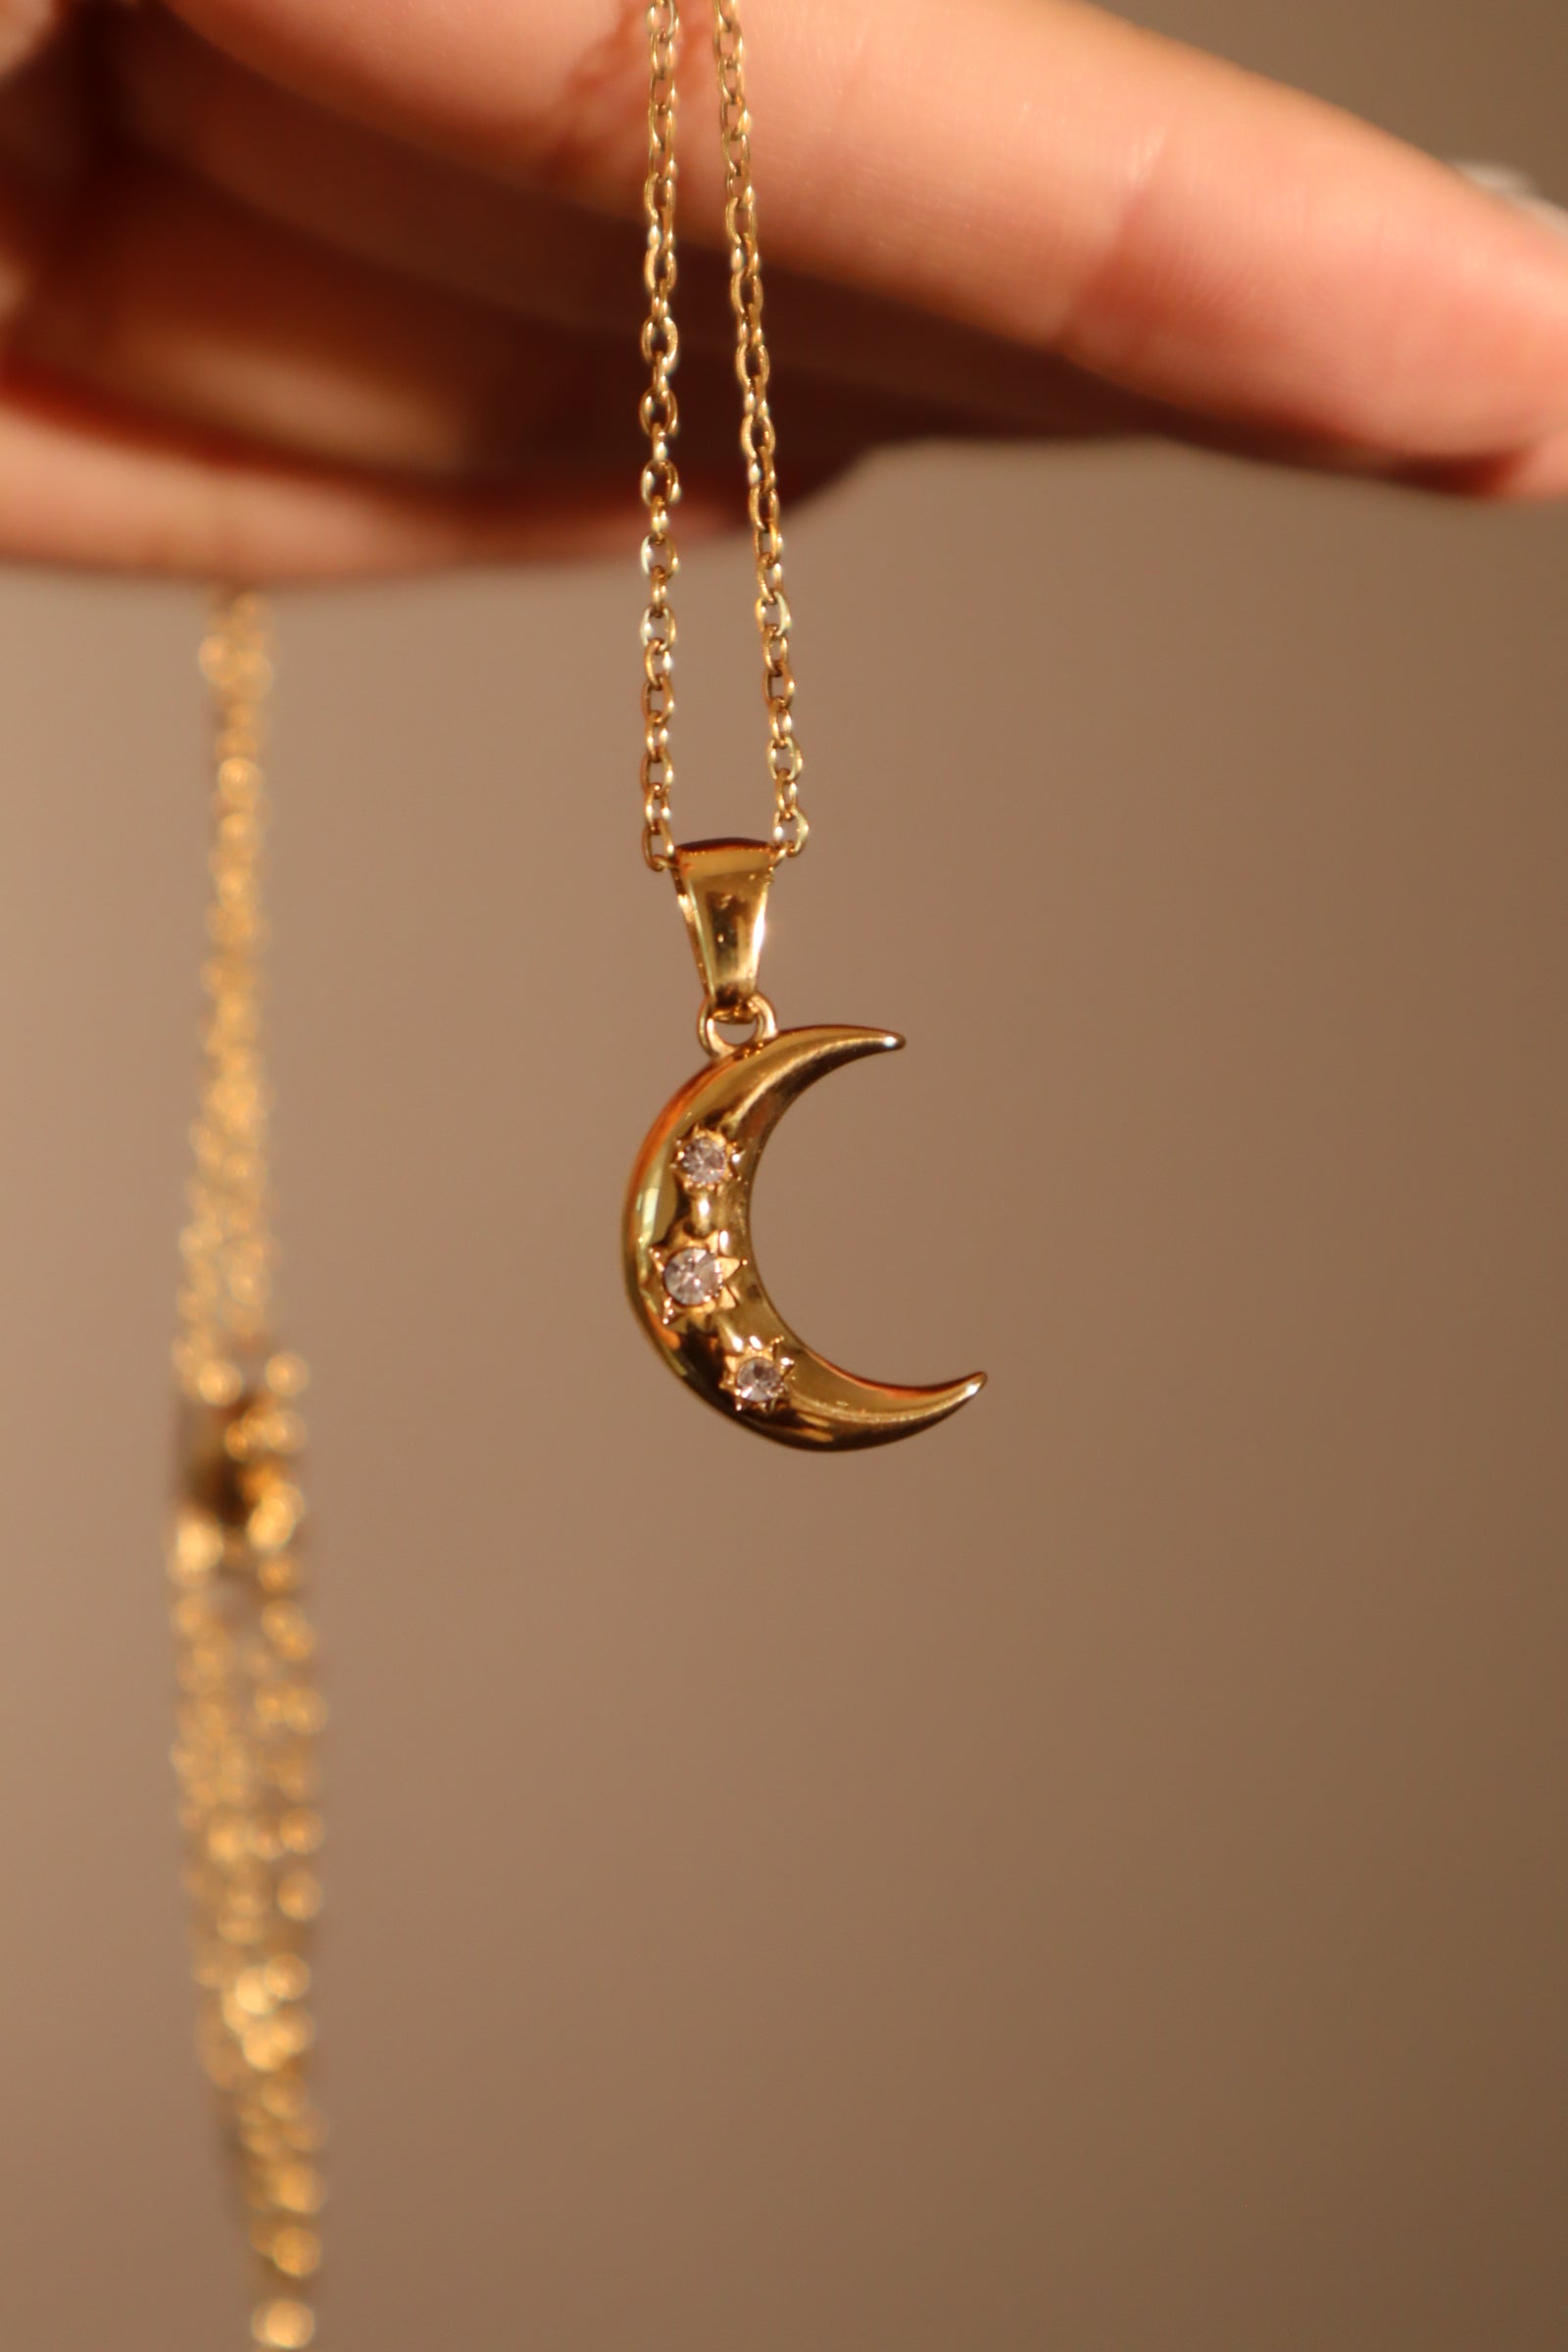 Yellow Gold 'Moon & Star' Necklace | Argenton Design bespoke fine jewellery